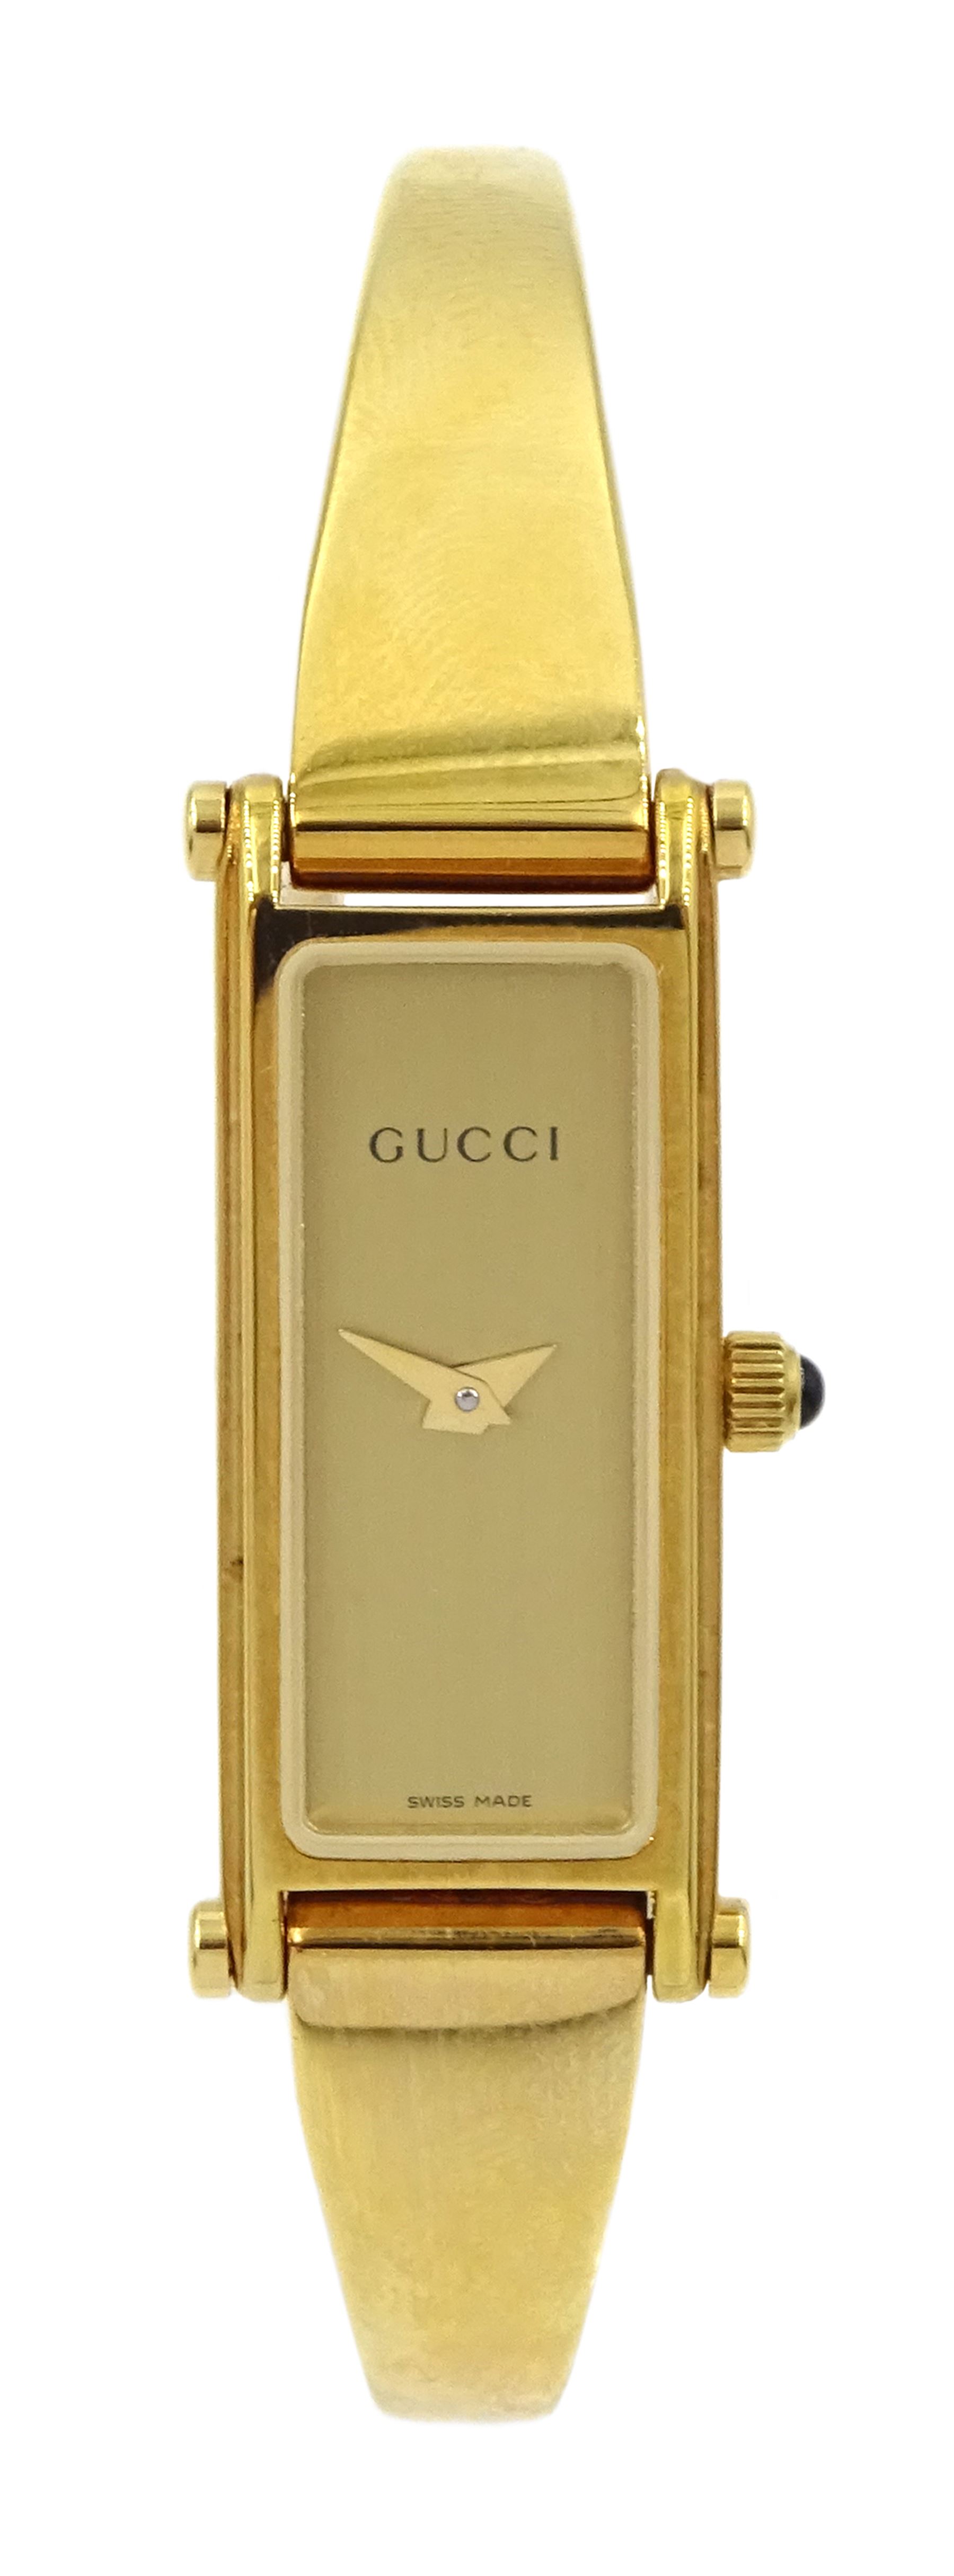 Gucci gold-plated ladies quartz wristwatch